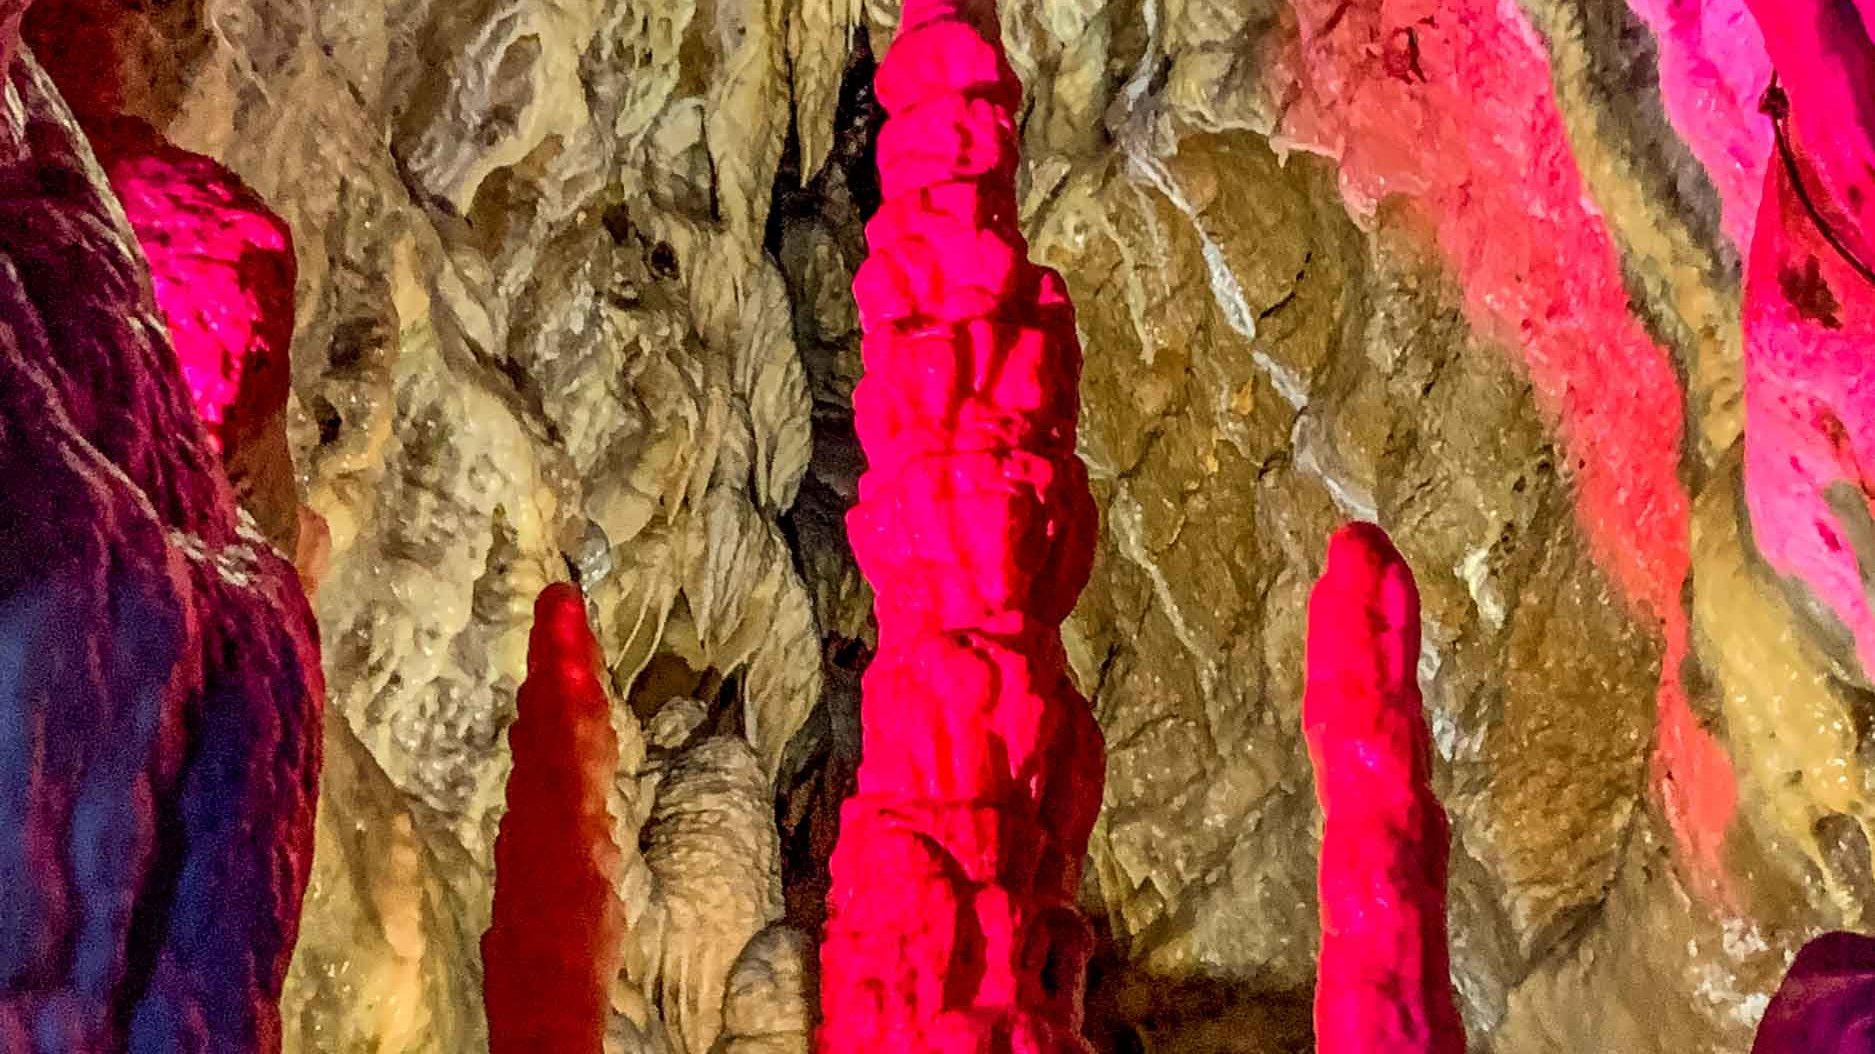 Teufelshöhle Pottenstein